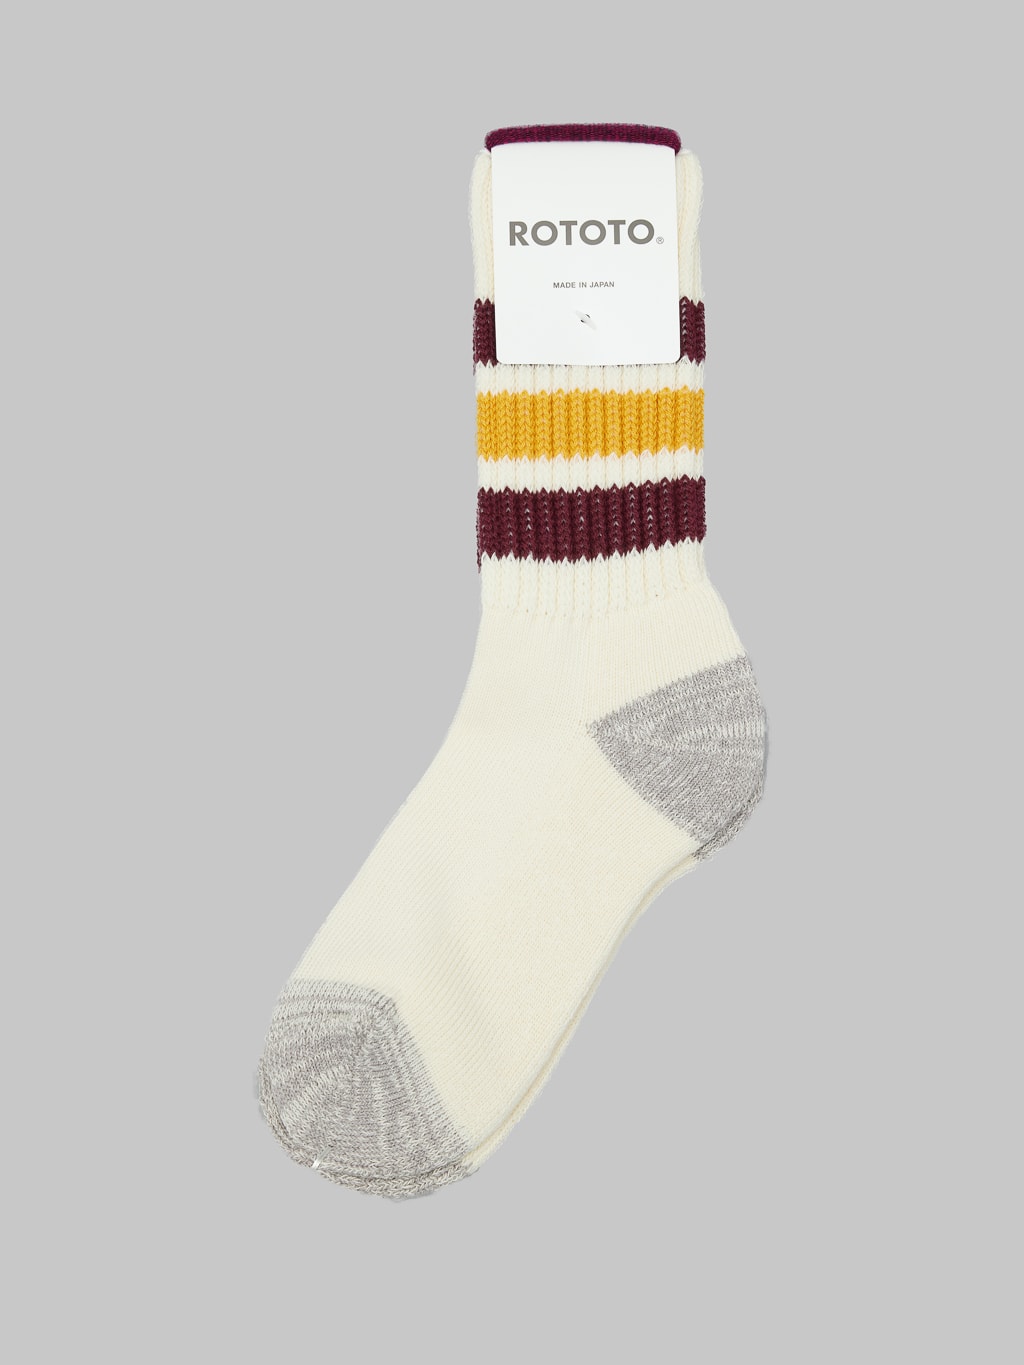 rototo coarse ribbed oldschool crew socks bordeaux yellow soft texture